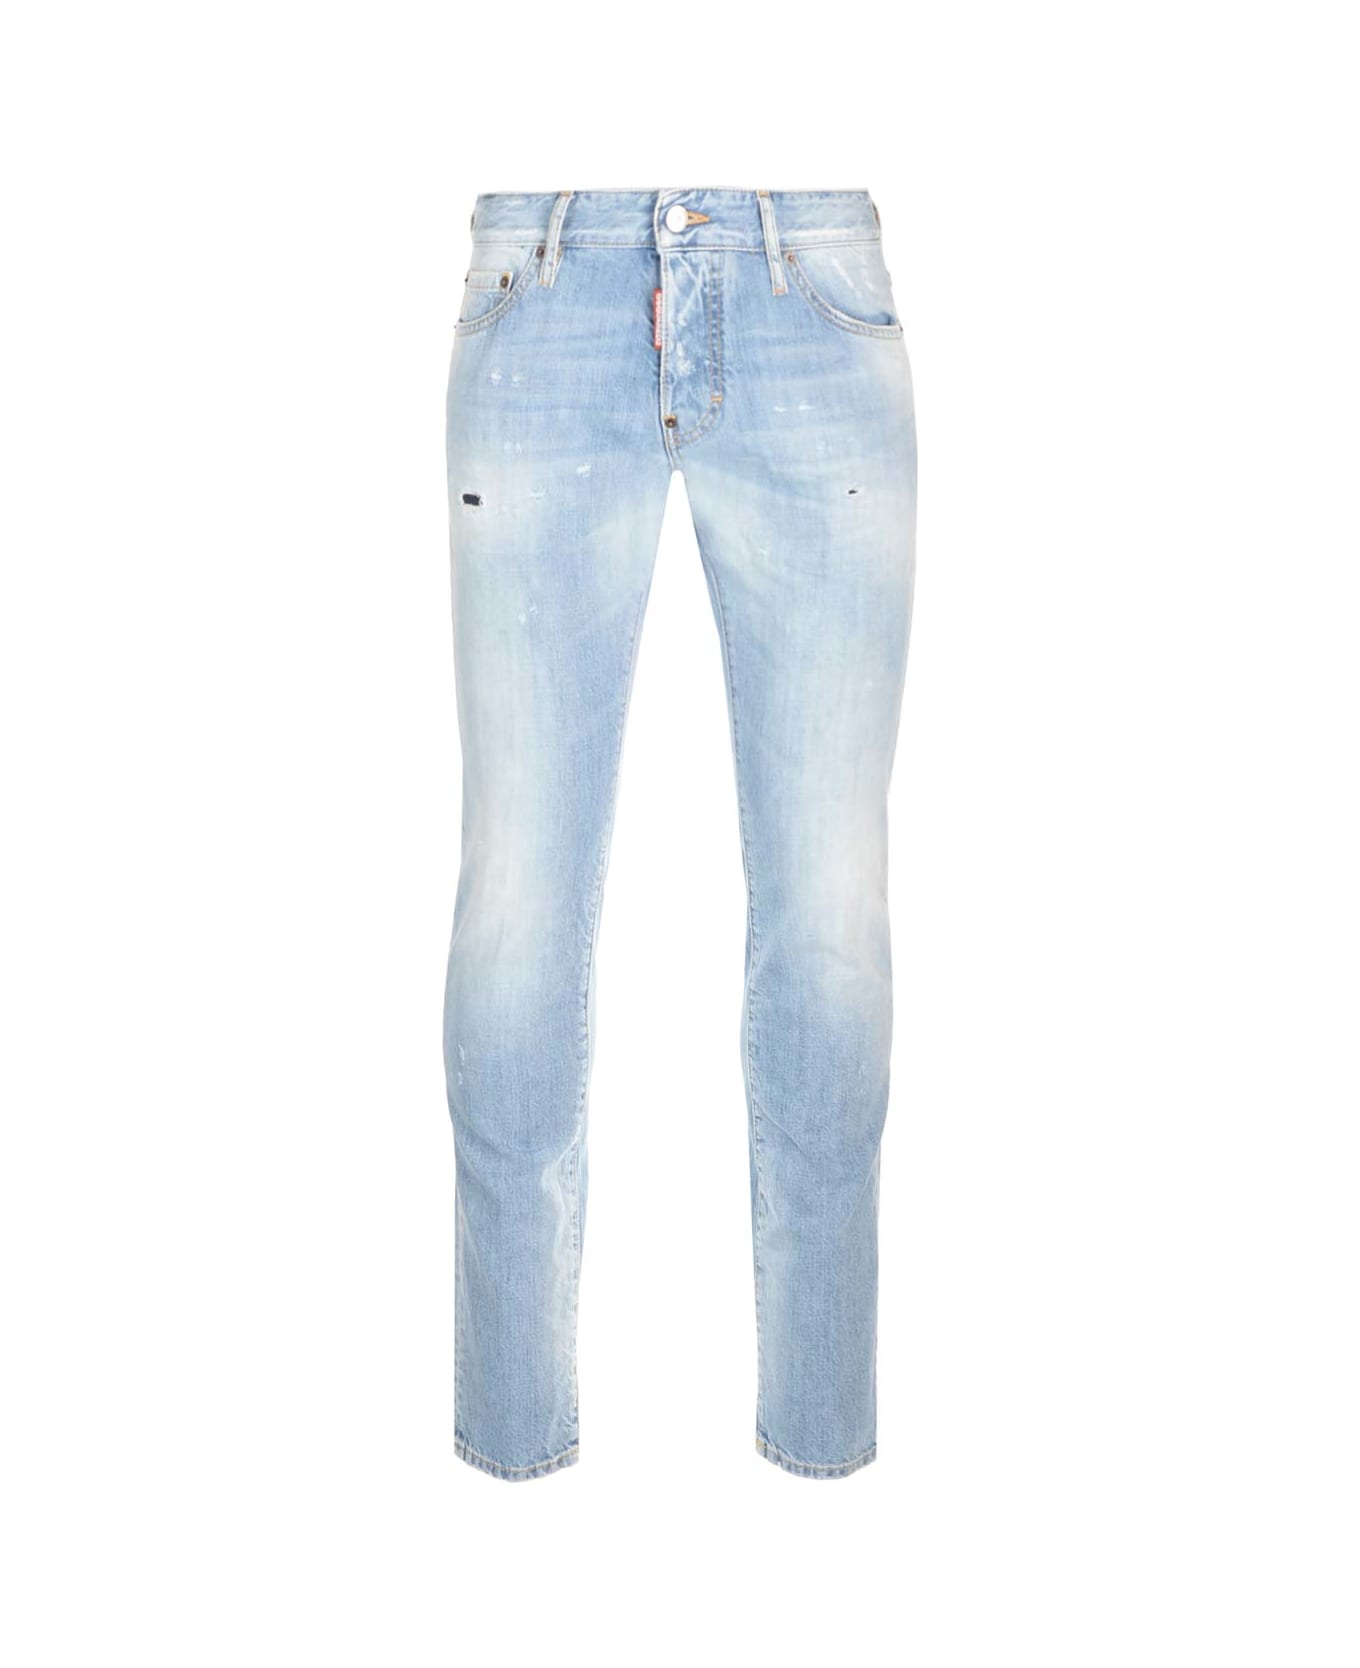 Dsquared2 Stretch Cotton Jeans - Denim